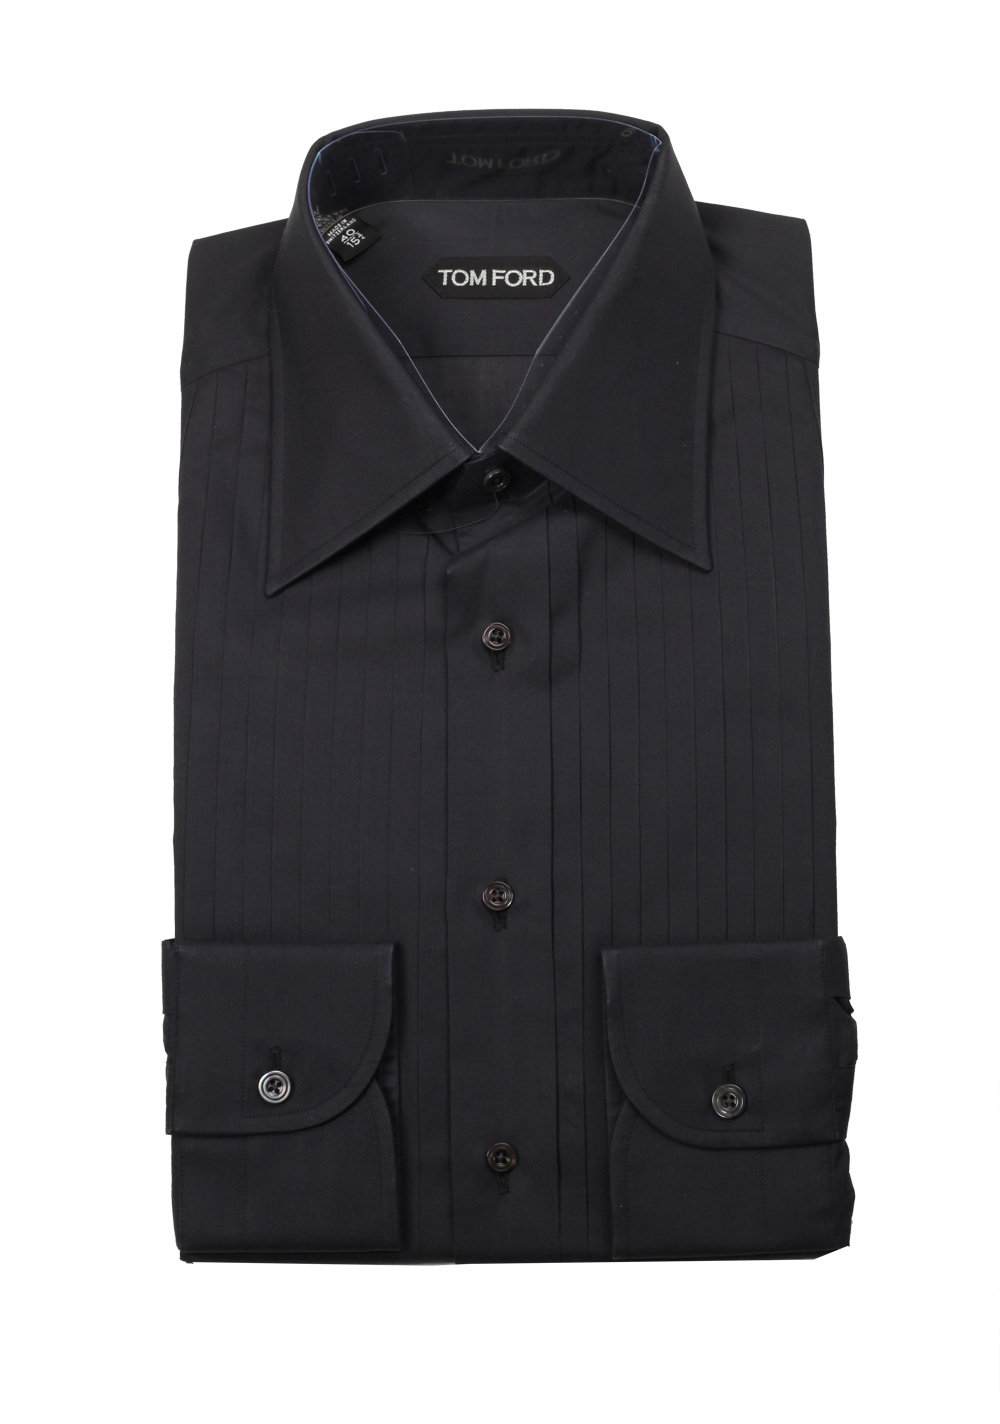 TOM FORD Solid Black Tuxedo Shirt Size 40 / 15,75 U.S. | Costume Limité